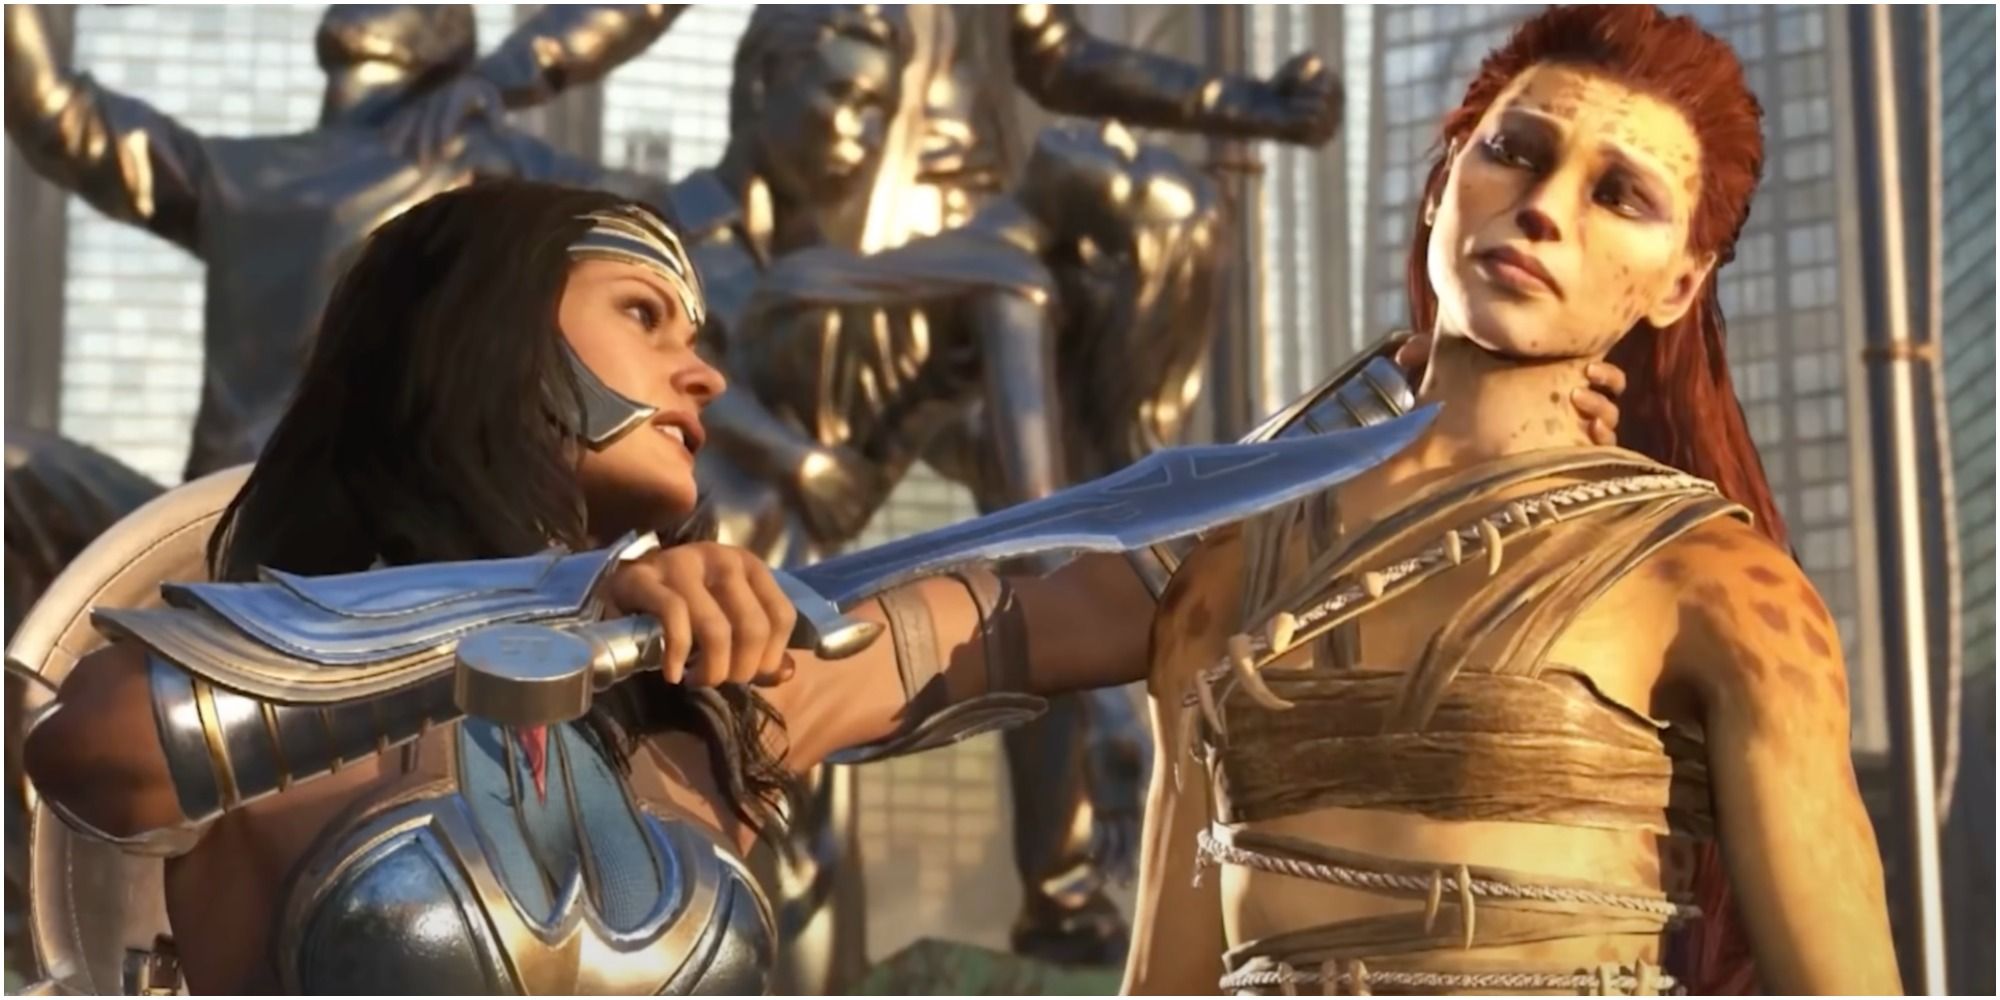 Wonder Woman threatening Cheetah in Injustice 2 after battle